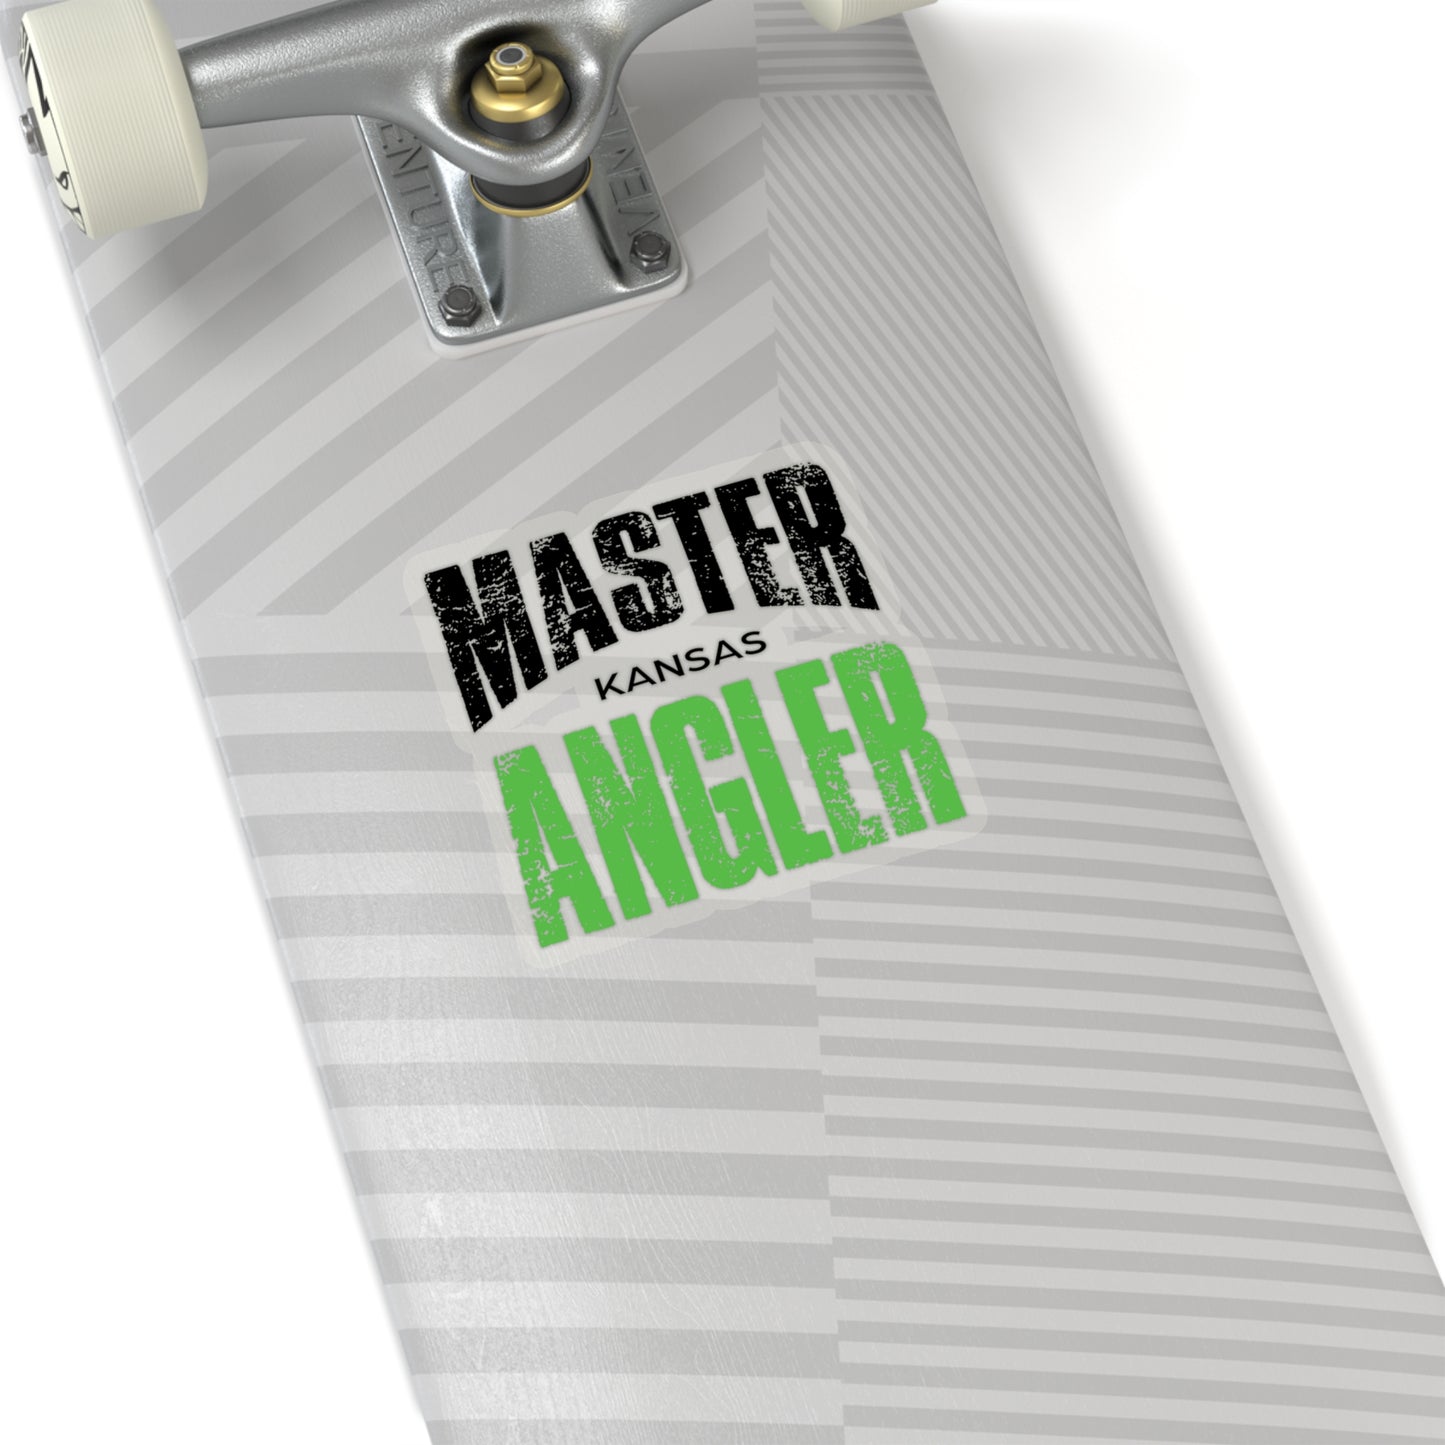 Kansas Master Angler Sticker - GREEN